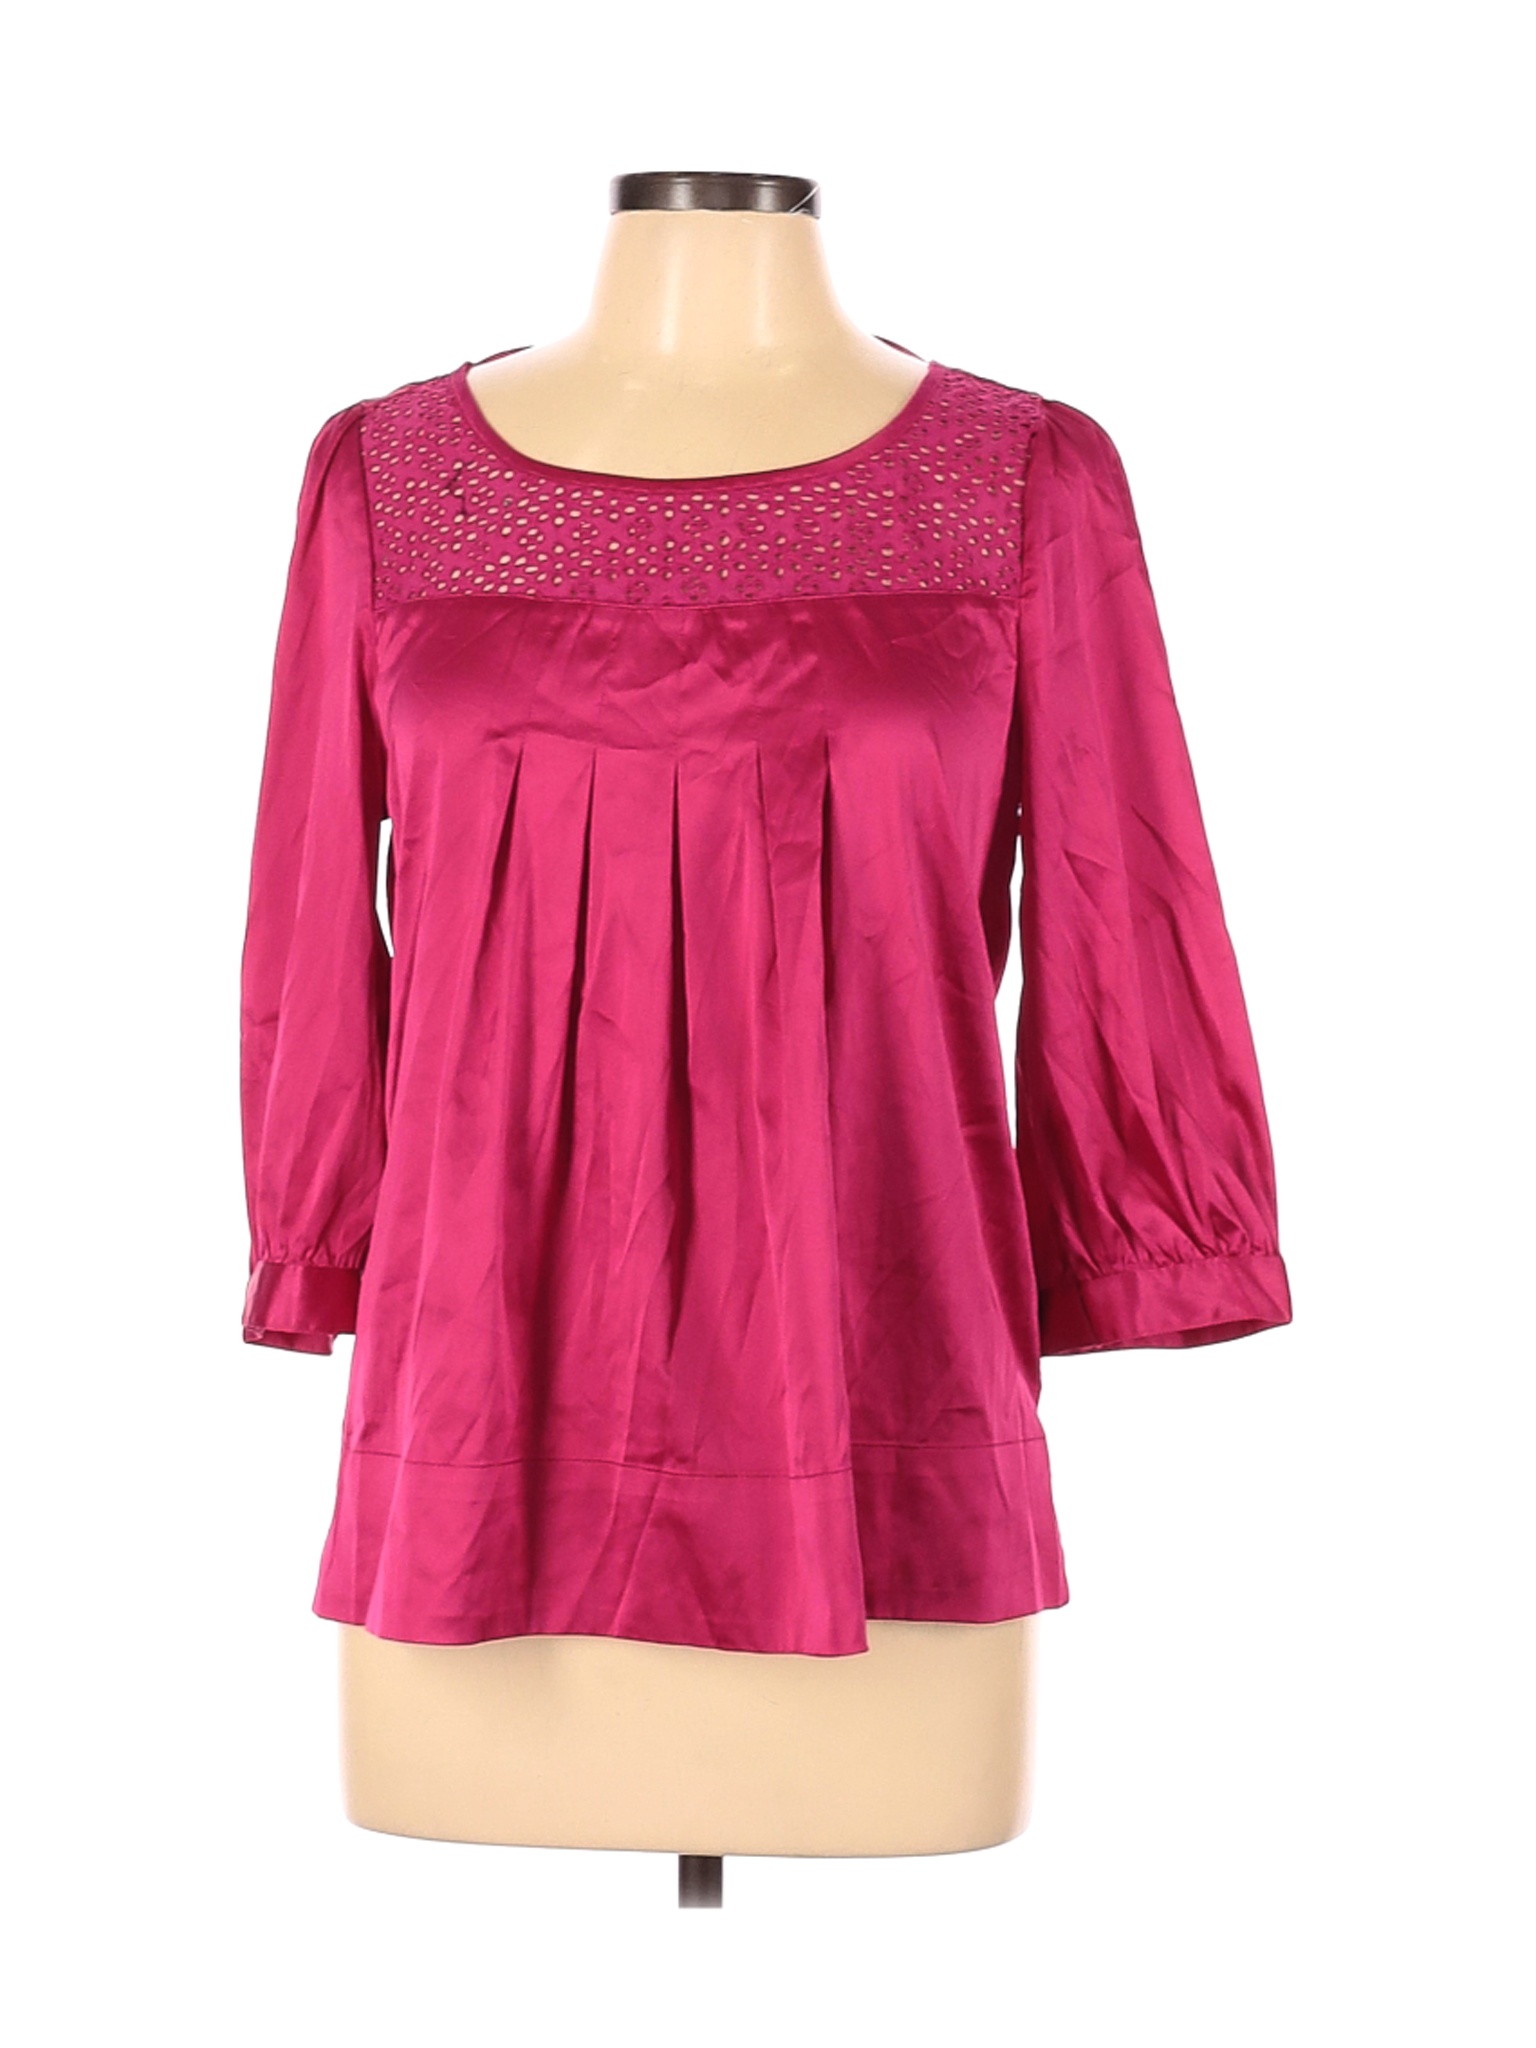 H&M Women Pink 3/4 Sleeve Blouse 10 | eBay